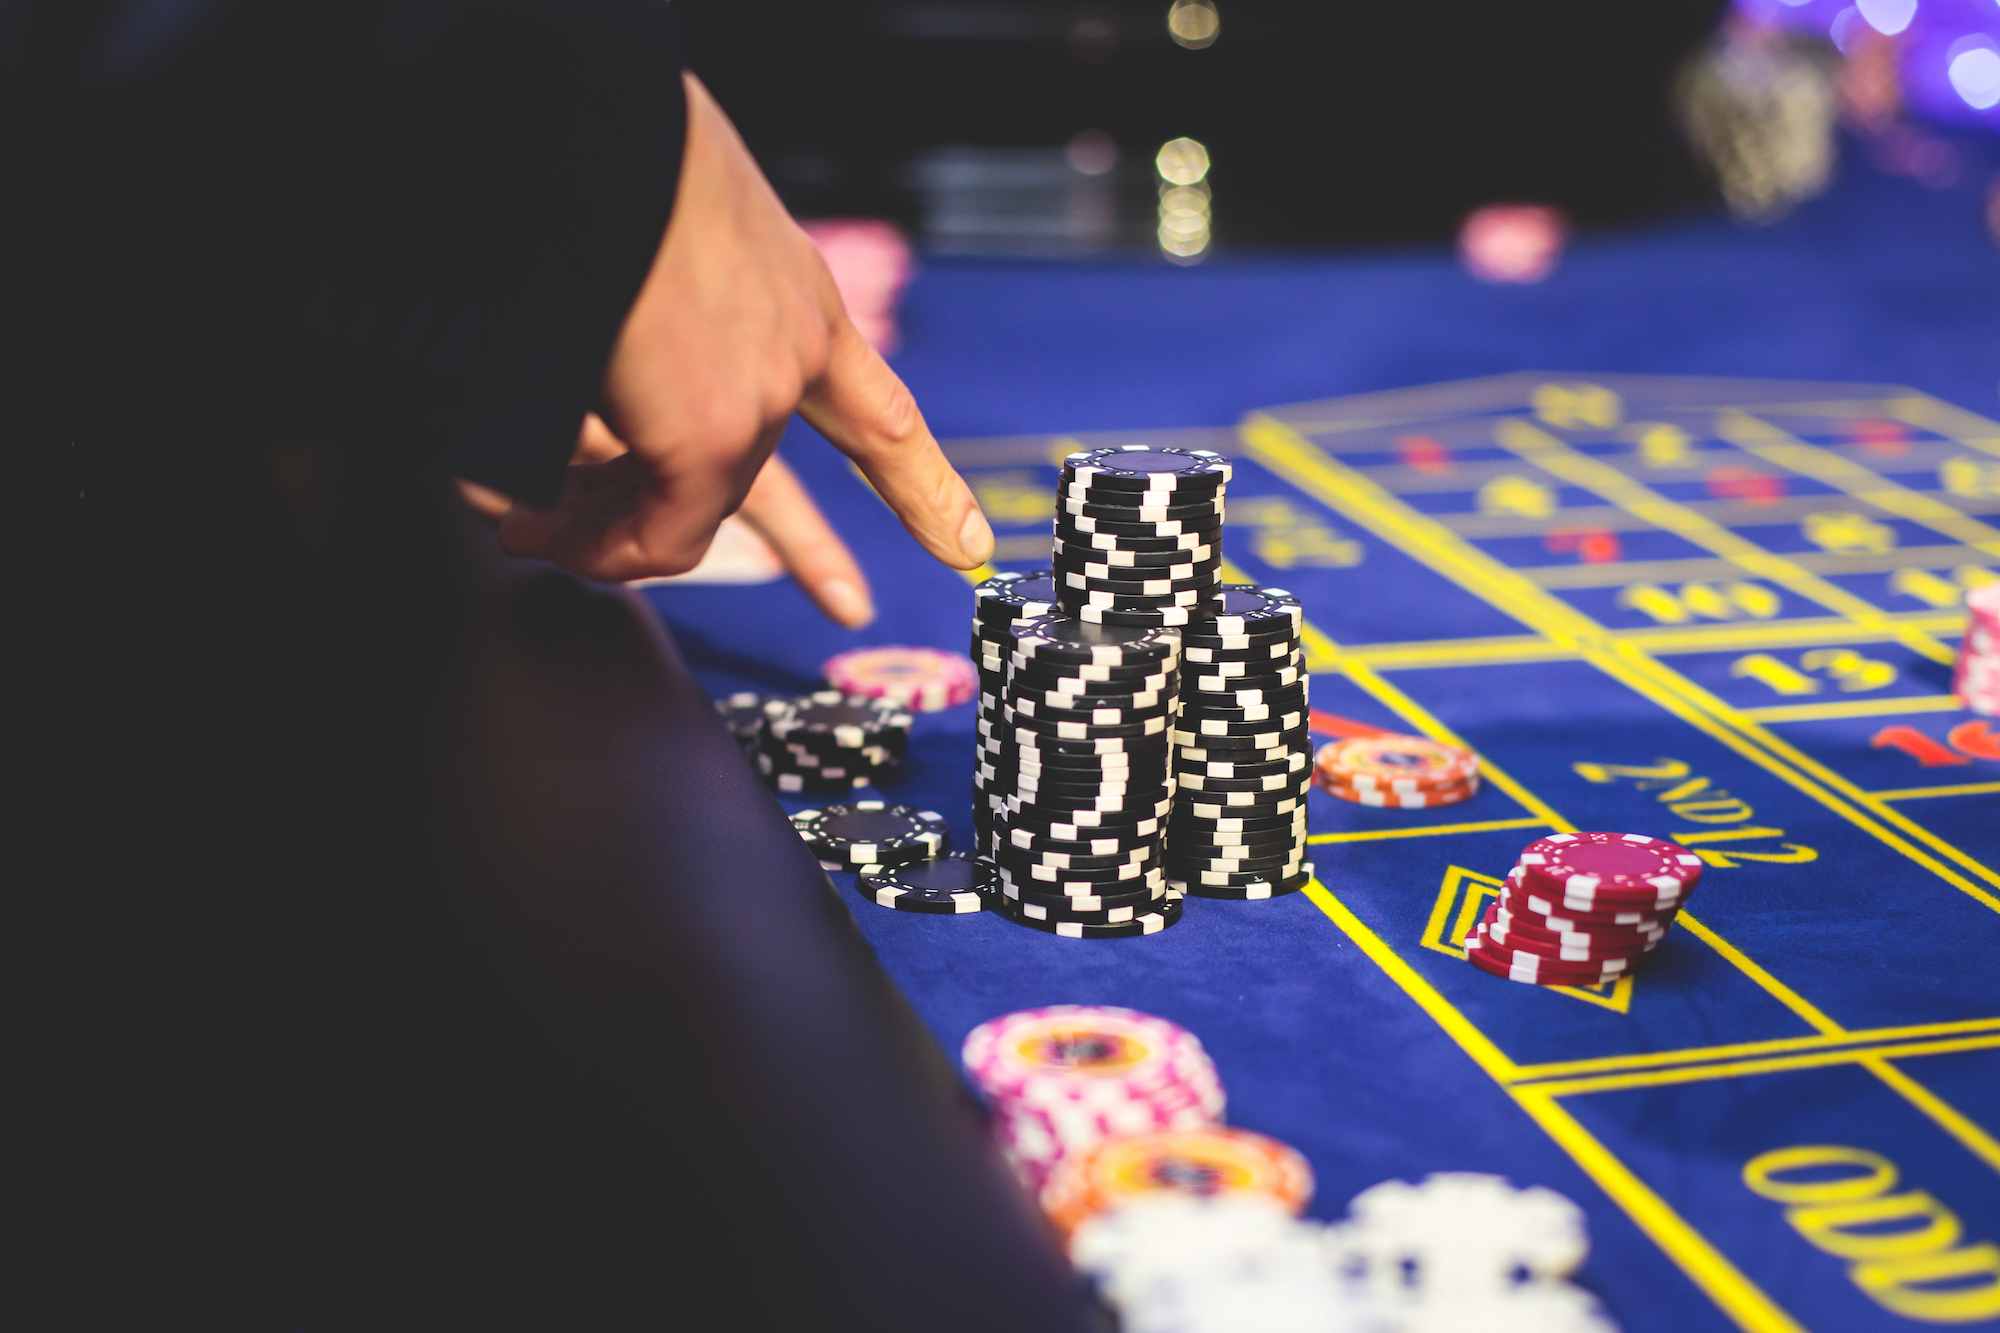 Casinos look set for a bonanza in Golden Week